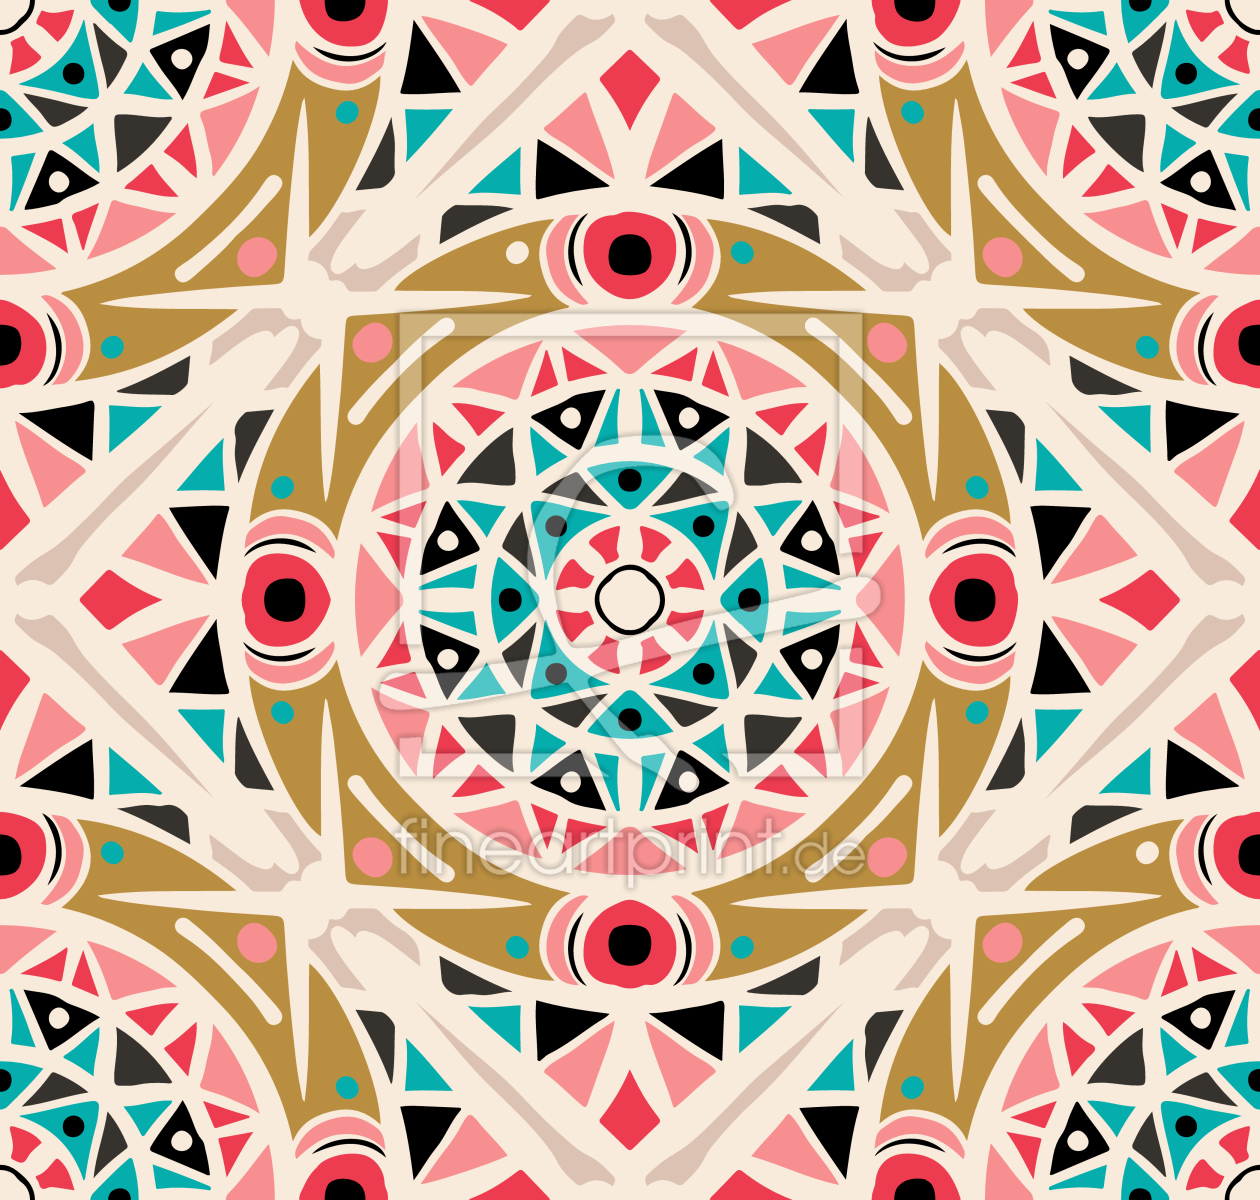 Bild-Nr.: 9012508 Zickzack Mandala erstellt von patterndesigns-com